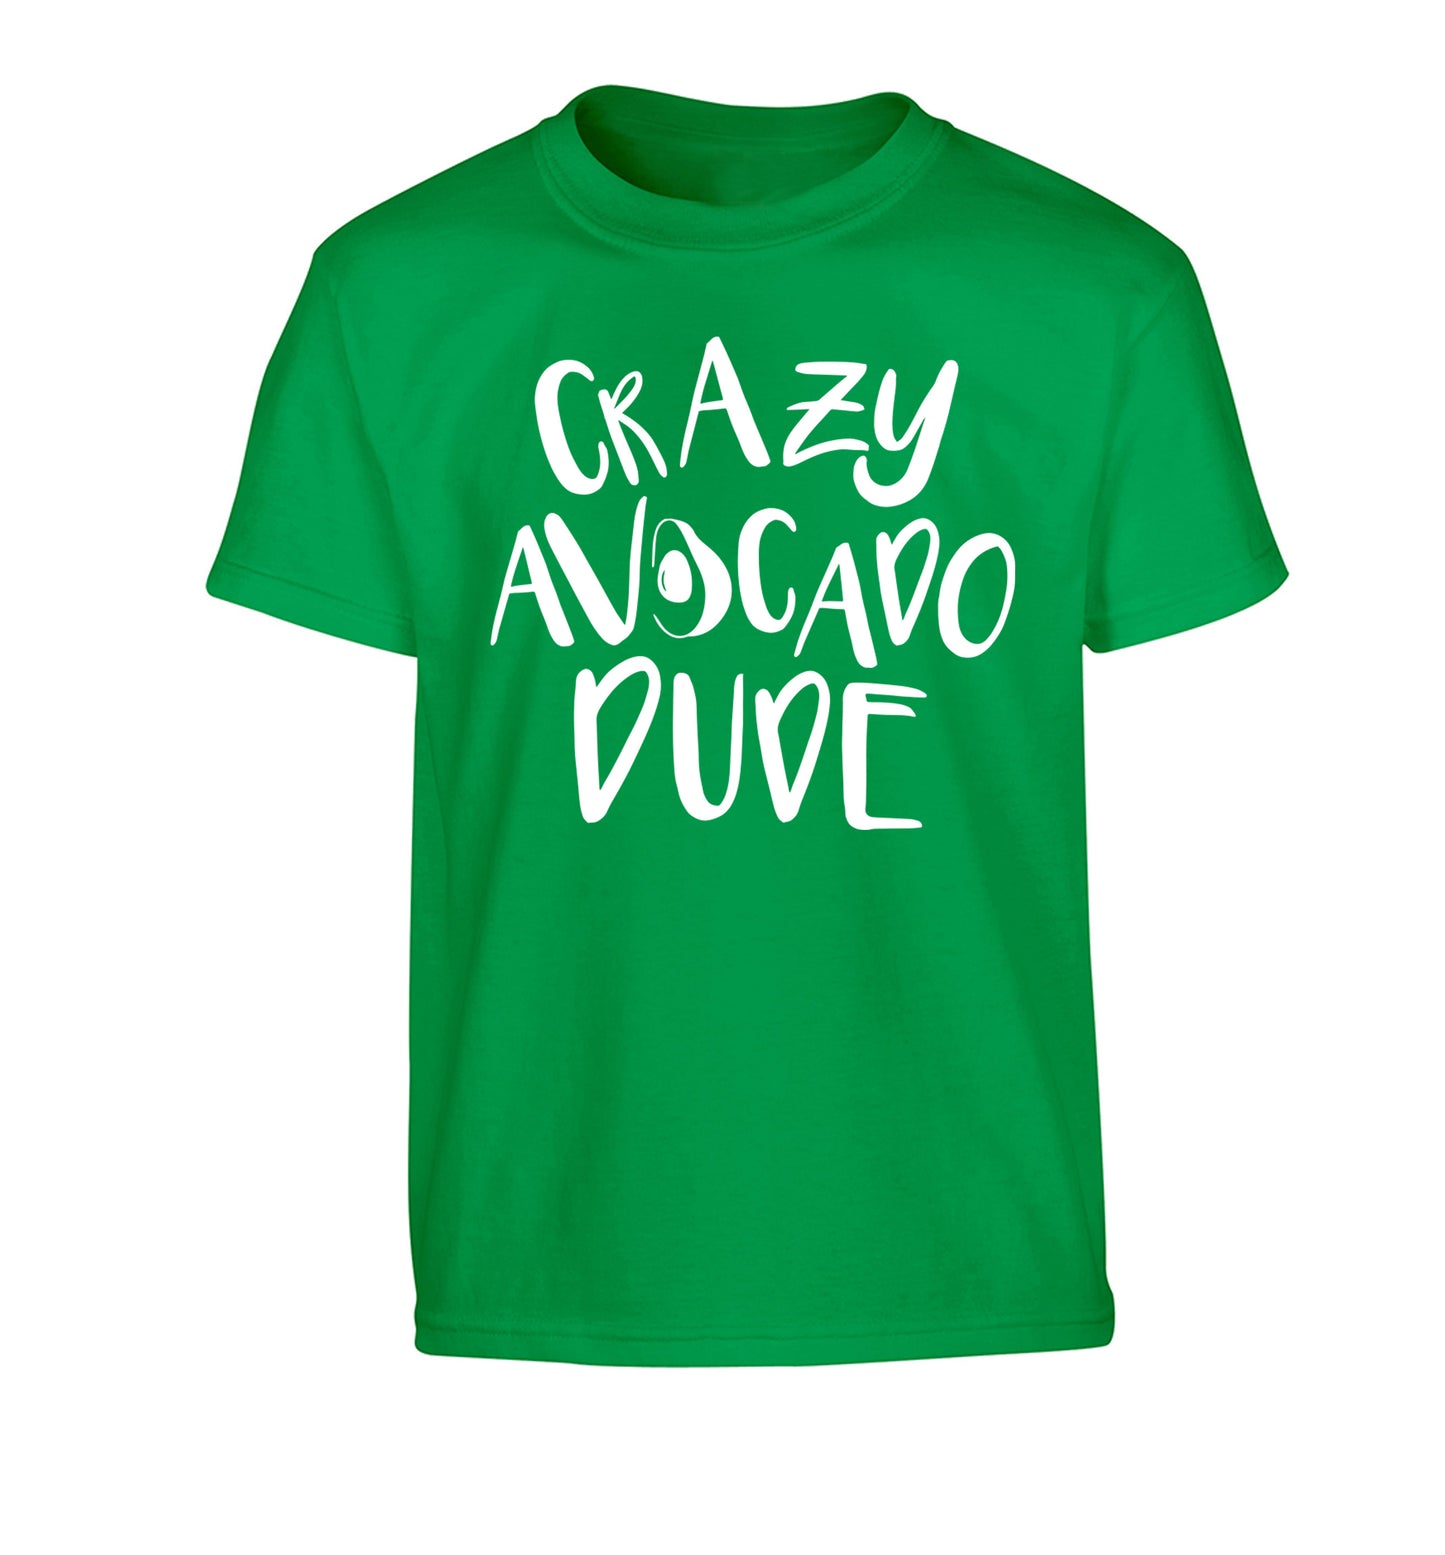 Crazy avocado dude Children's green Tshirt 12-14 Years